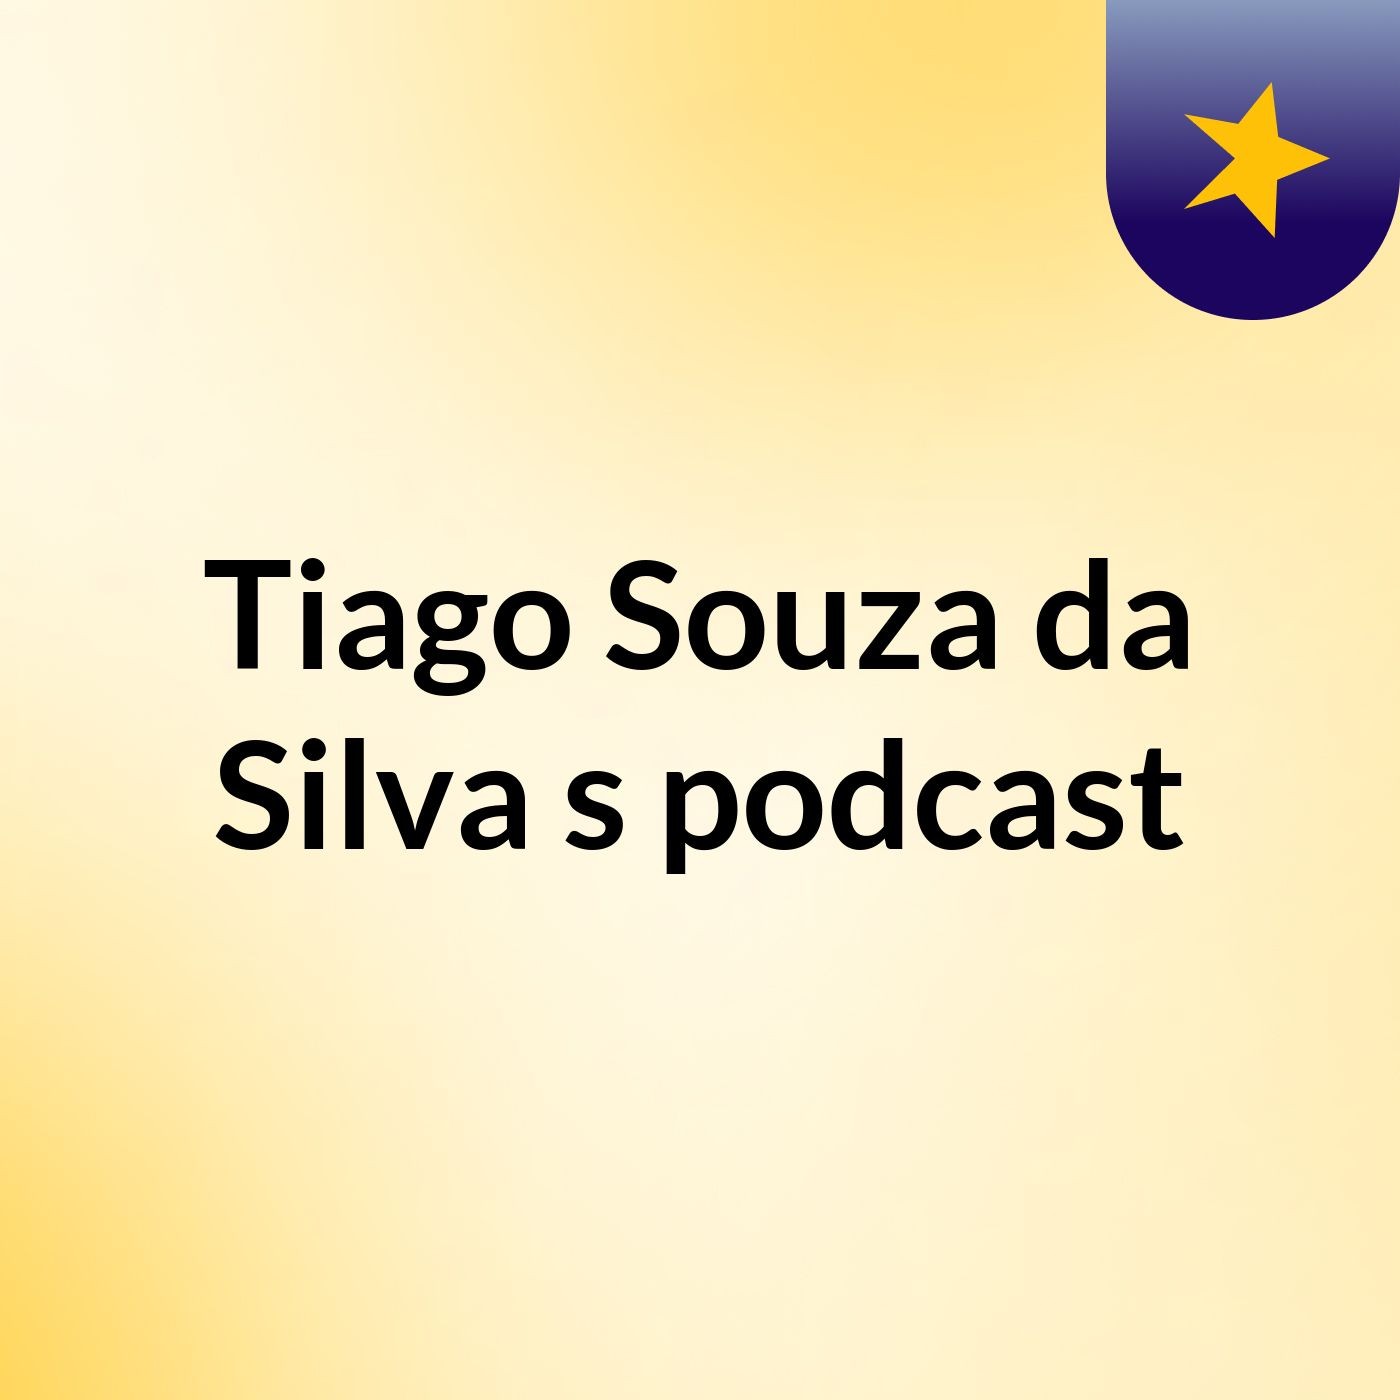 Tiago Souza da Silva's podcast